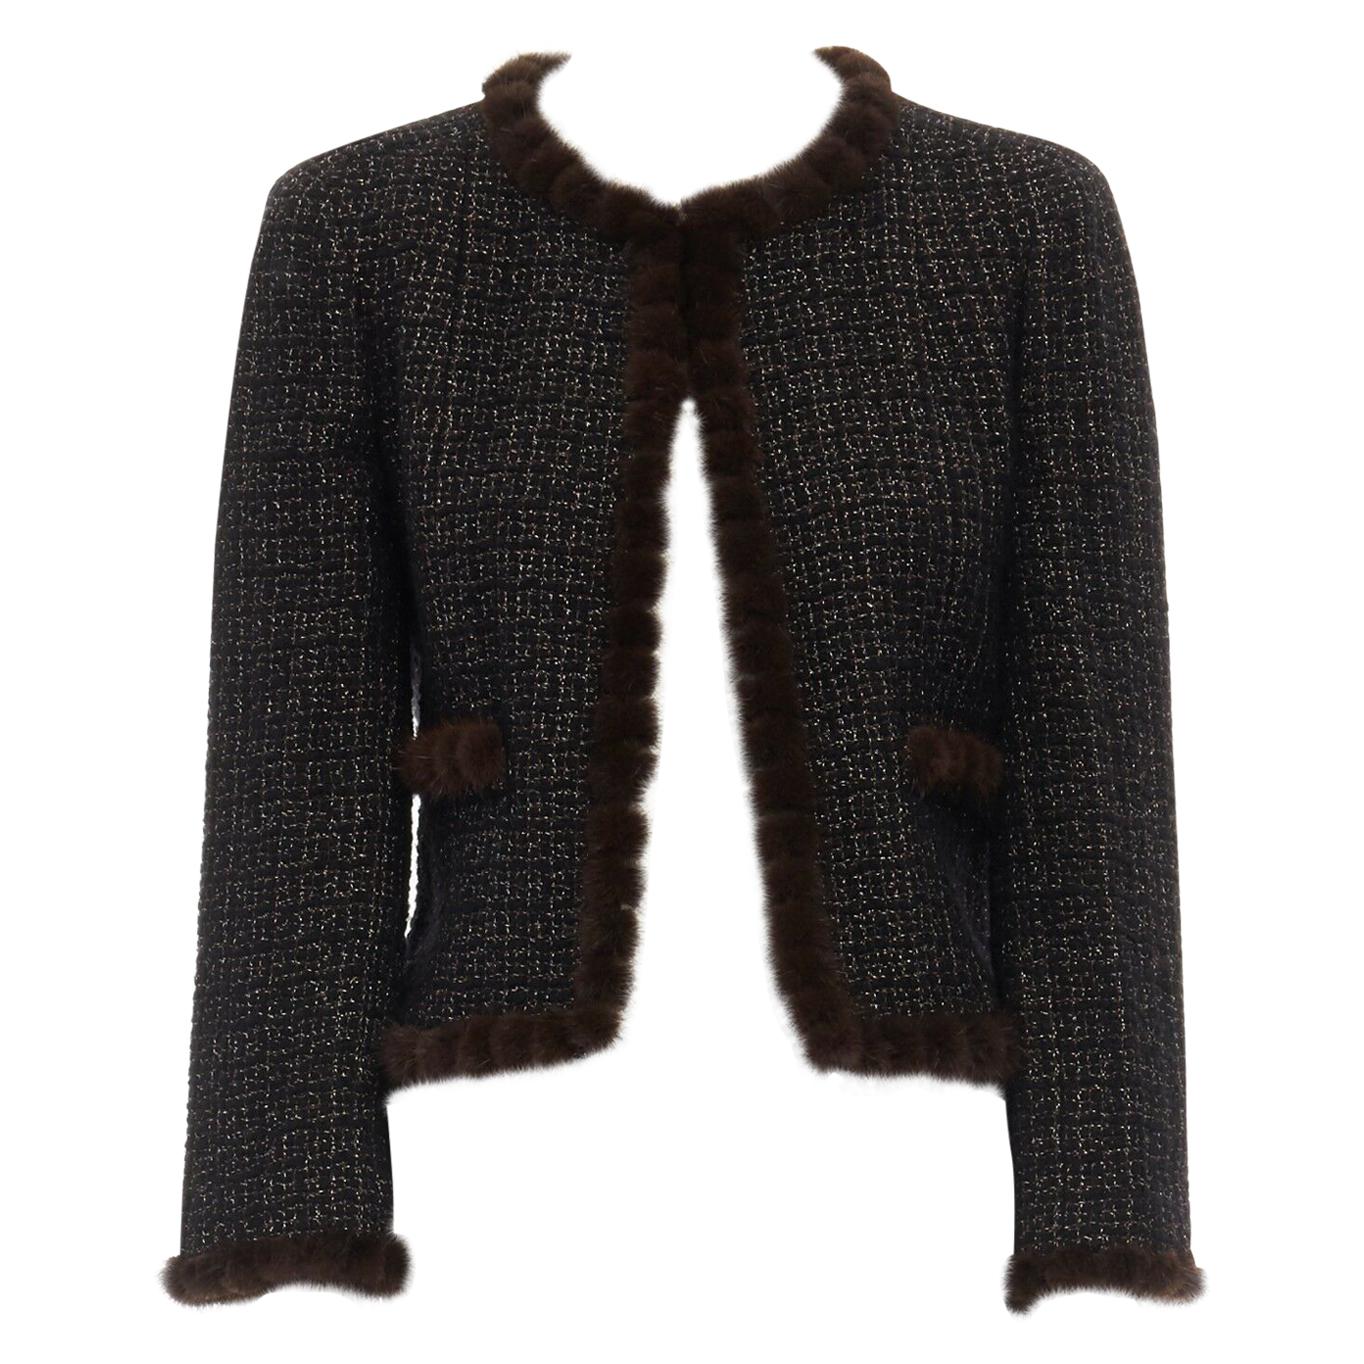 Hot sale】✓Autumn and Winter New Chanel Style Black Gold Fried Street Suit  Jacket Men's Korean Weavi